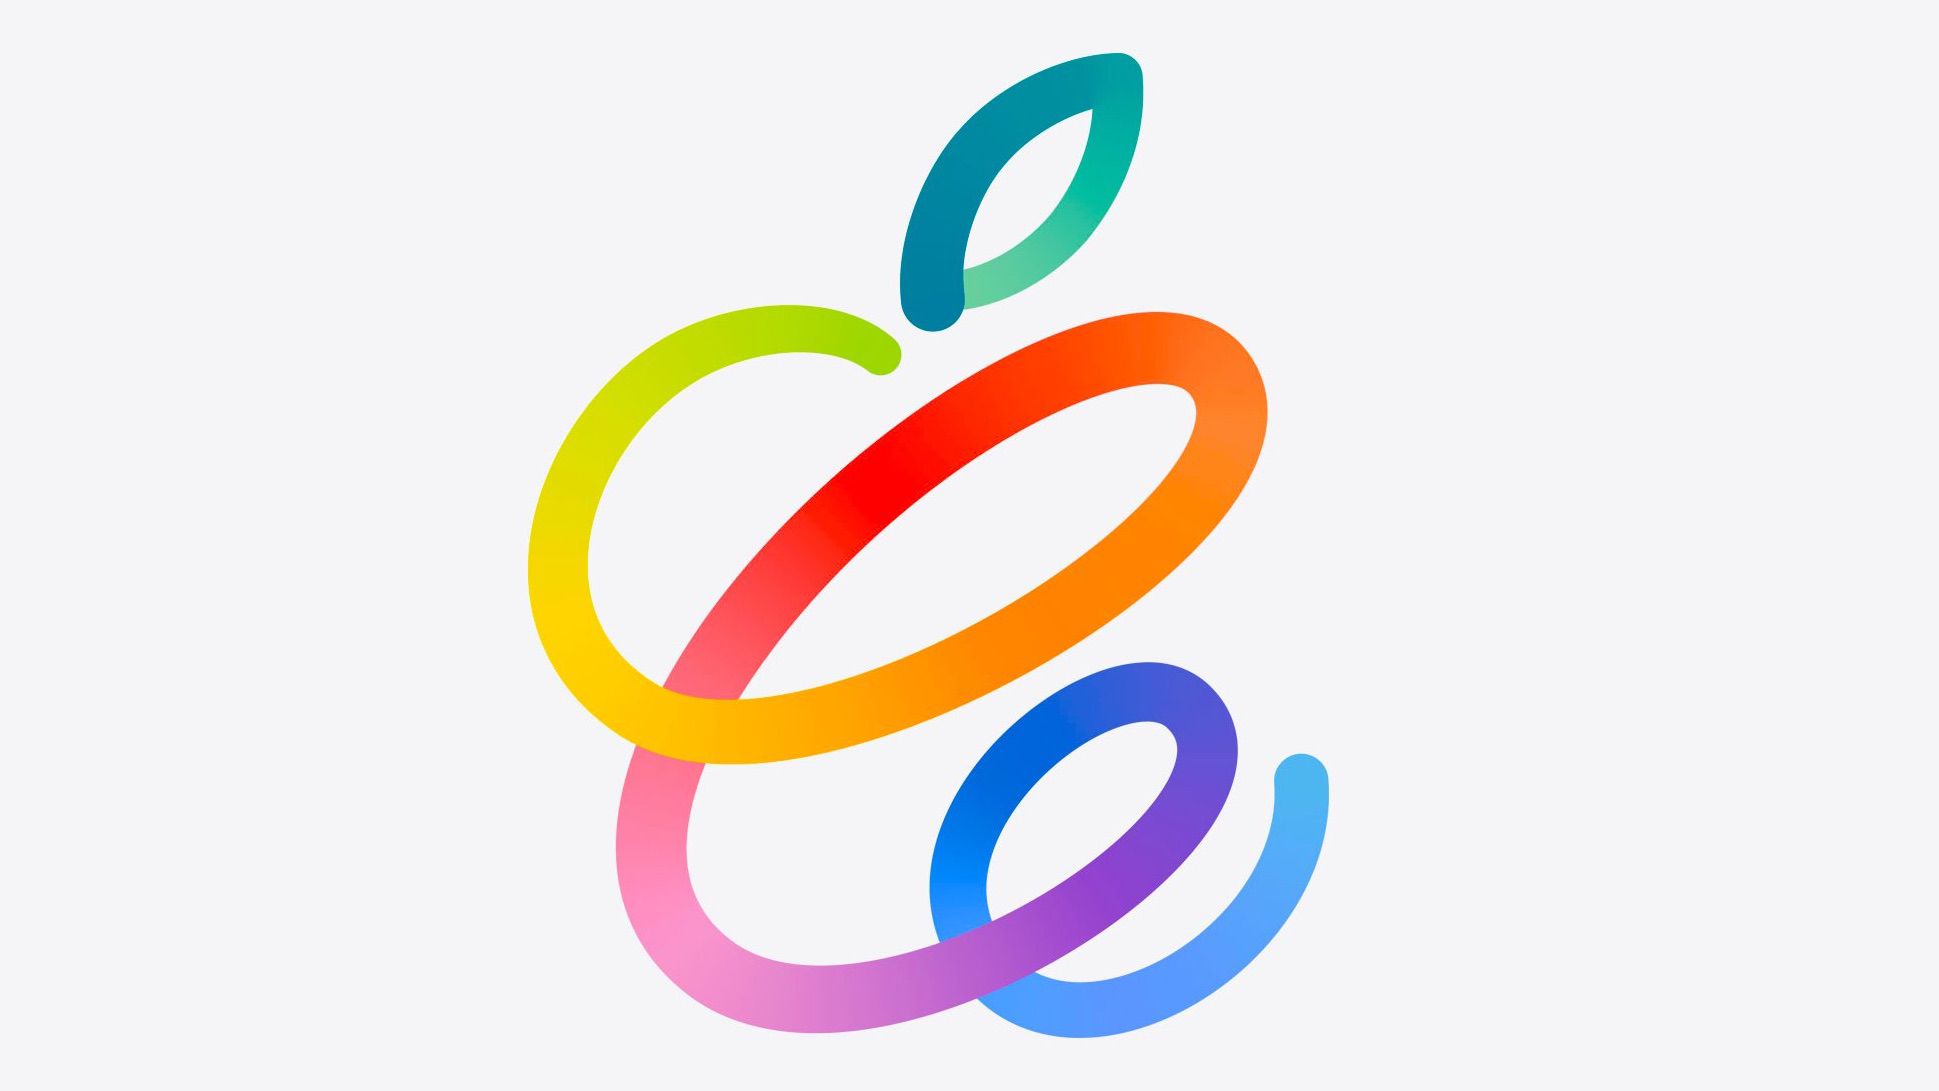 Twitter Hashflag for Apple’s April 20 event goes live